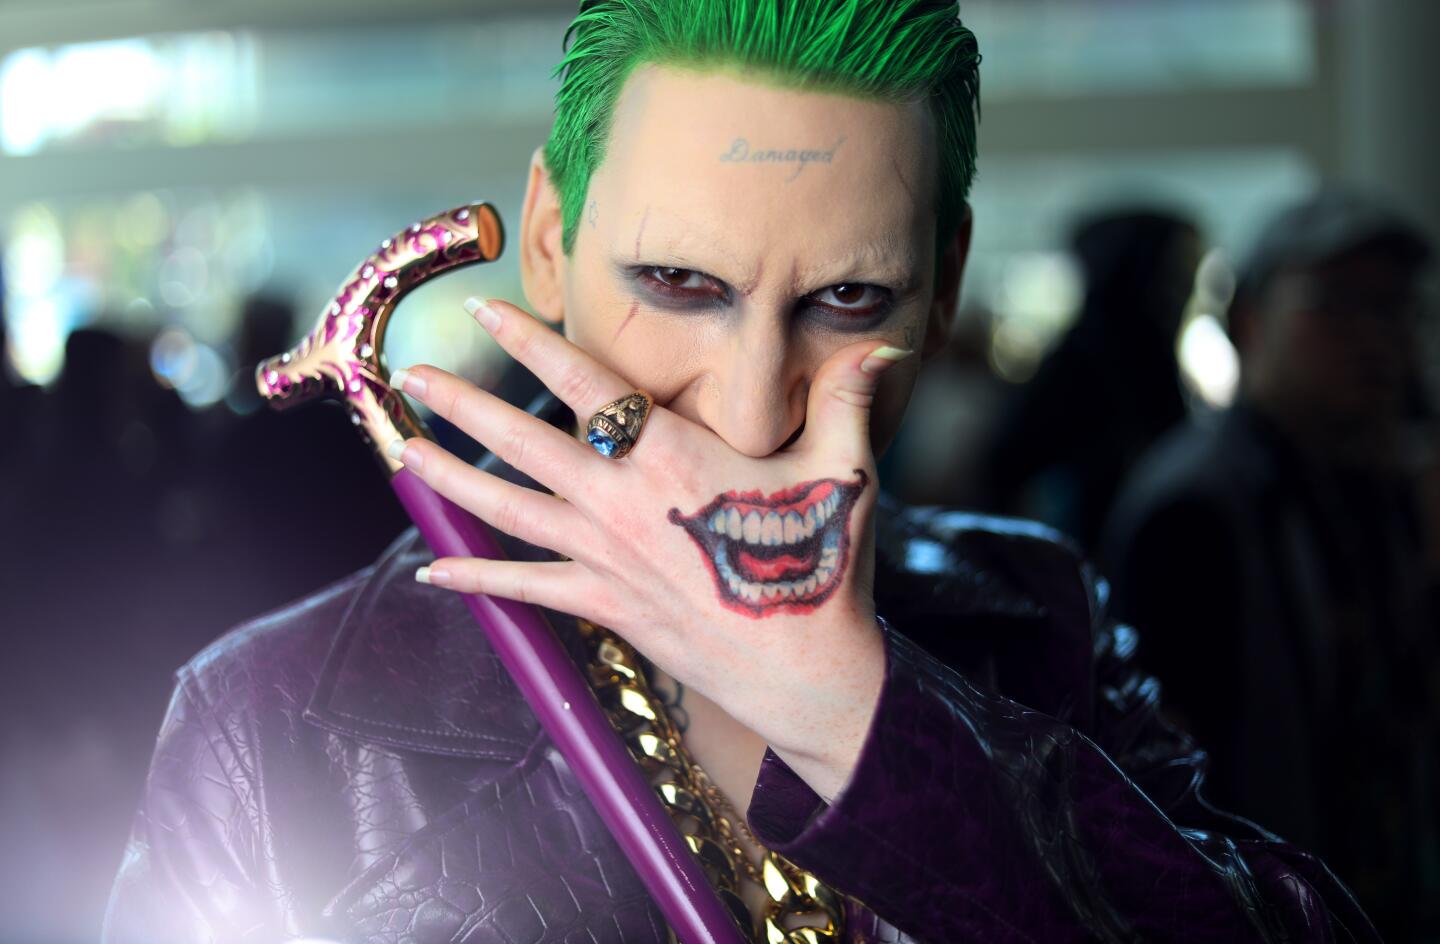 Mathew Morningstar of Tucson dressed as the Joker at Comic-Con International in San Diego on Thursday.